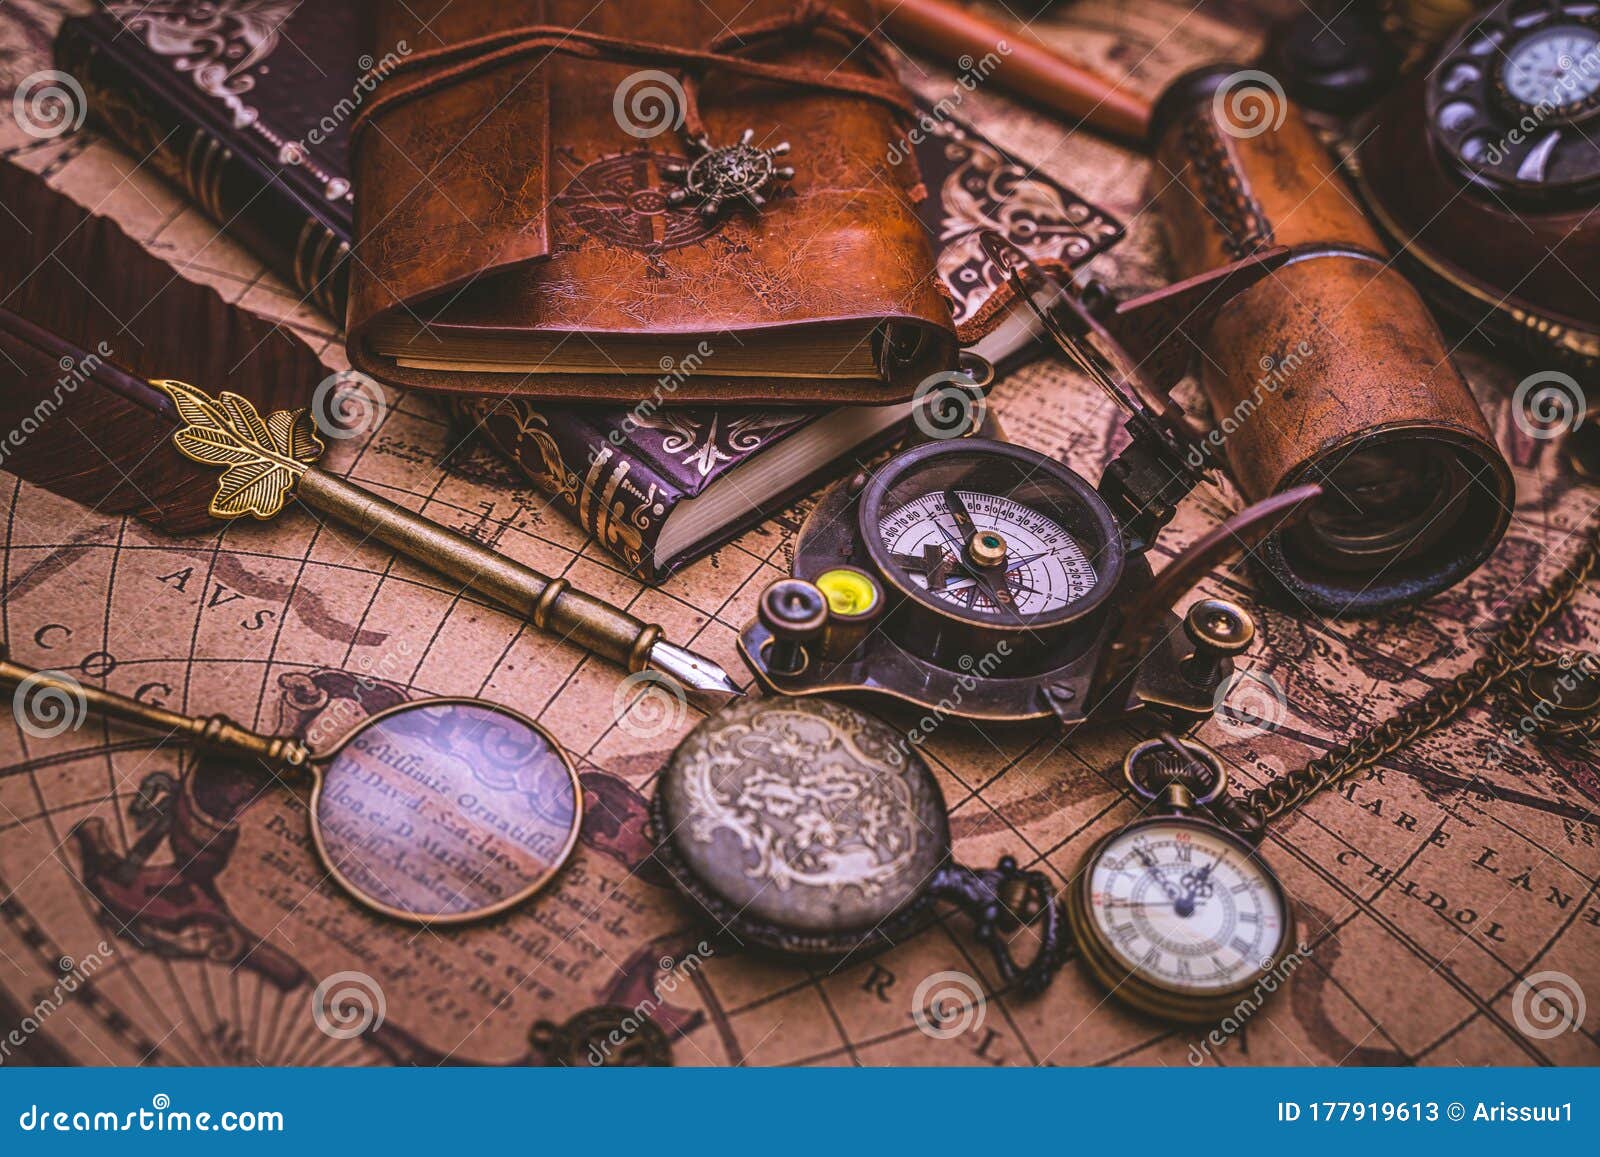 Details about   Antique vintage brass 2" compass nautical maritime locket compass & leather case 